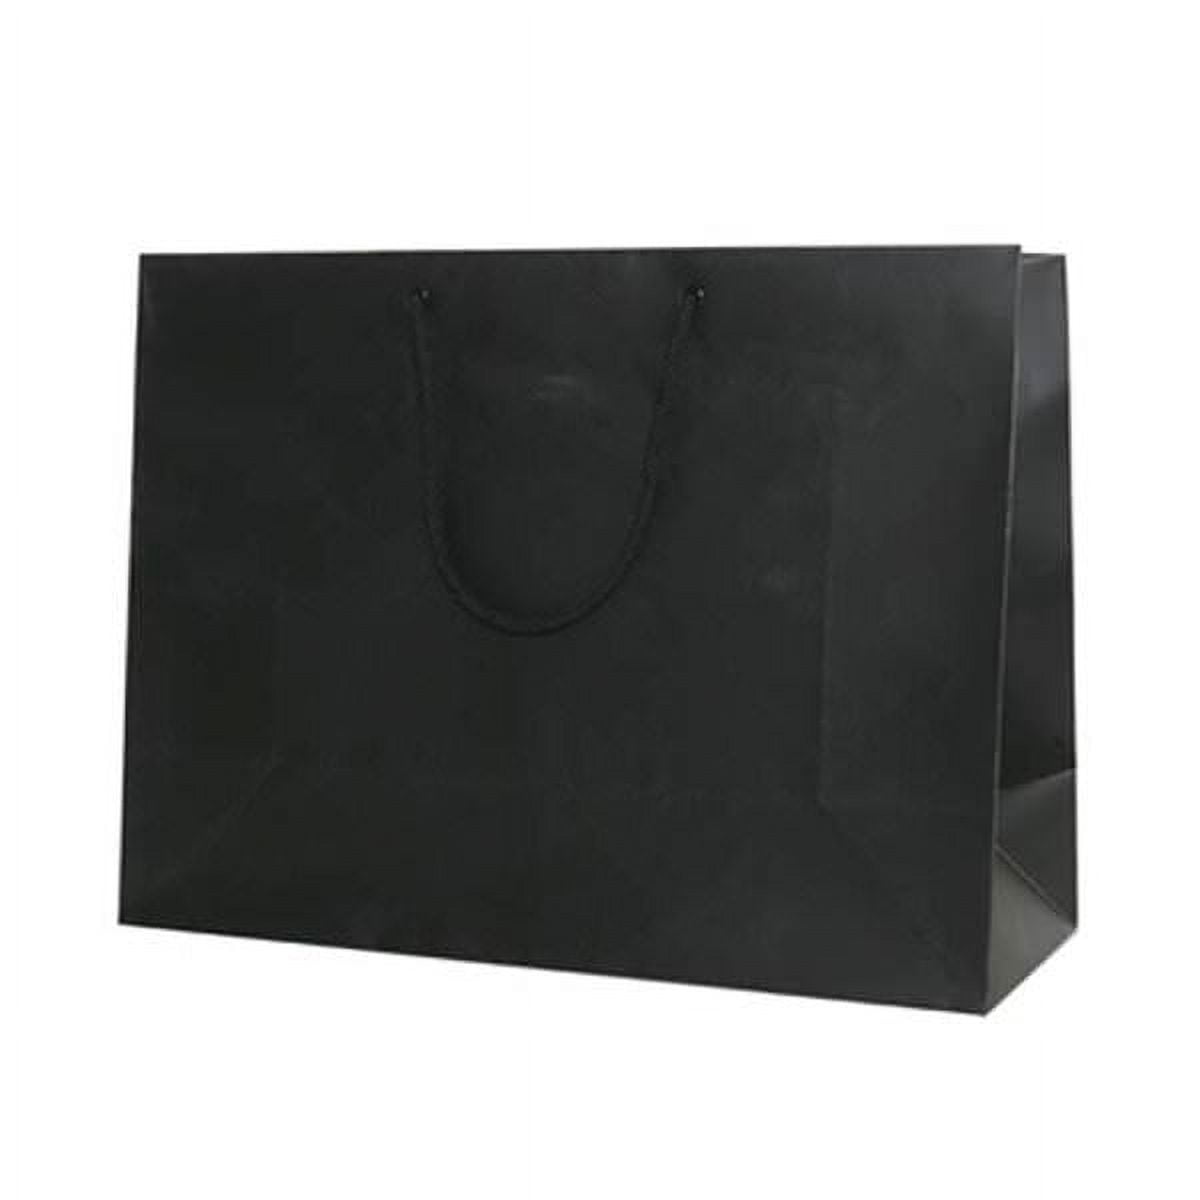 CHANEL Paper Shopping gift bag 16.5 x 12 X 5.75” Black Medium